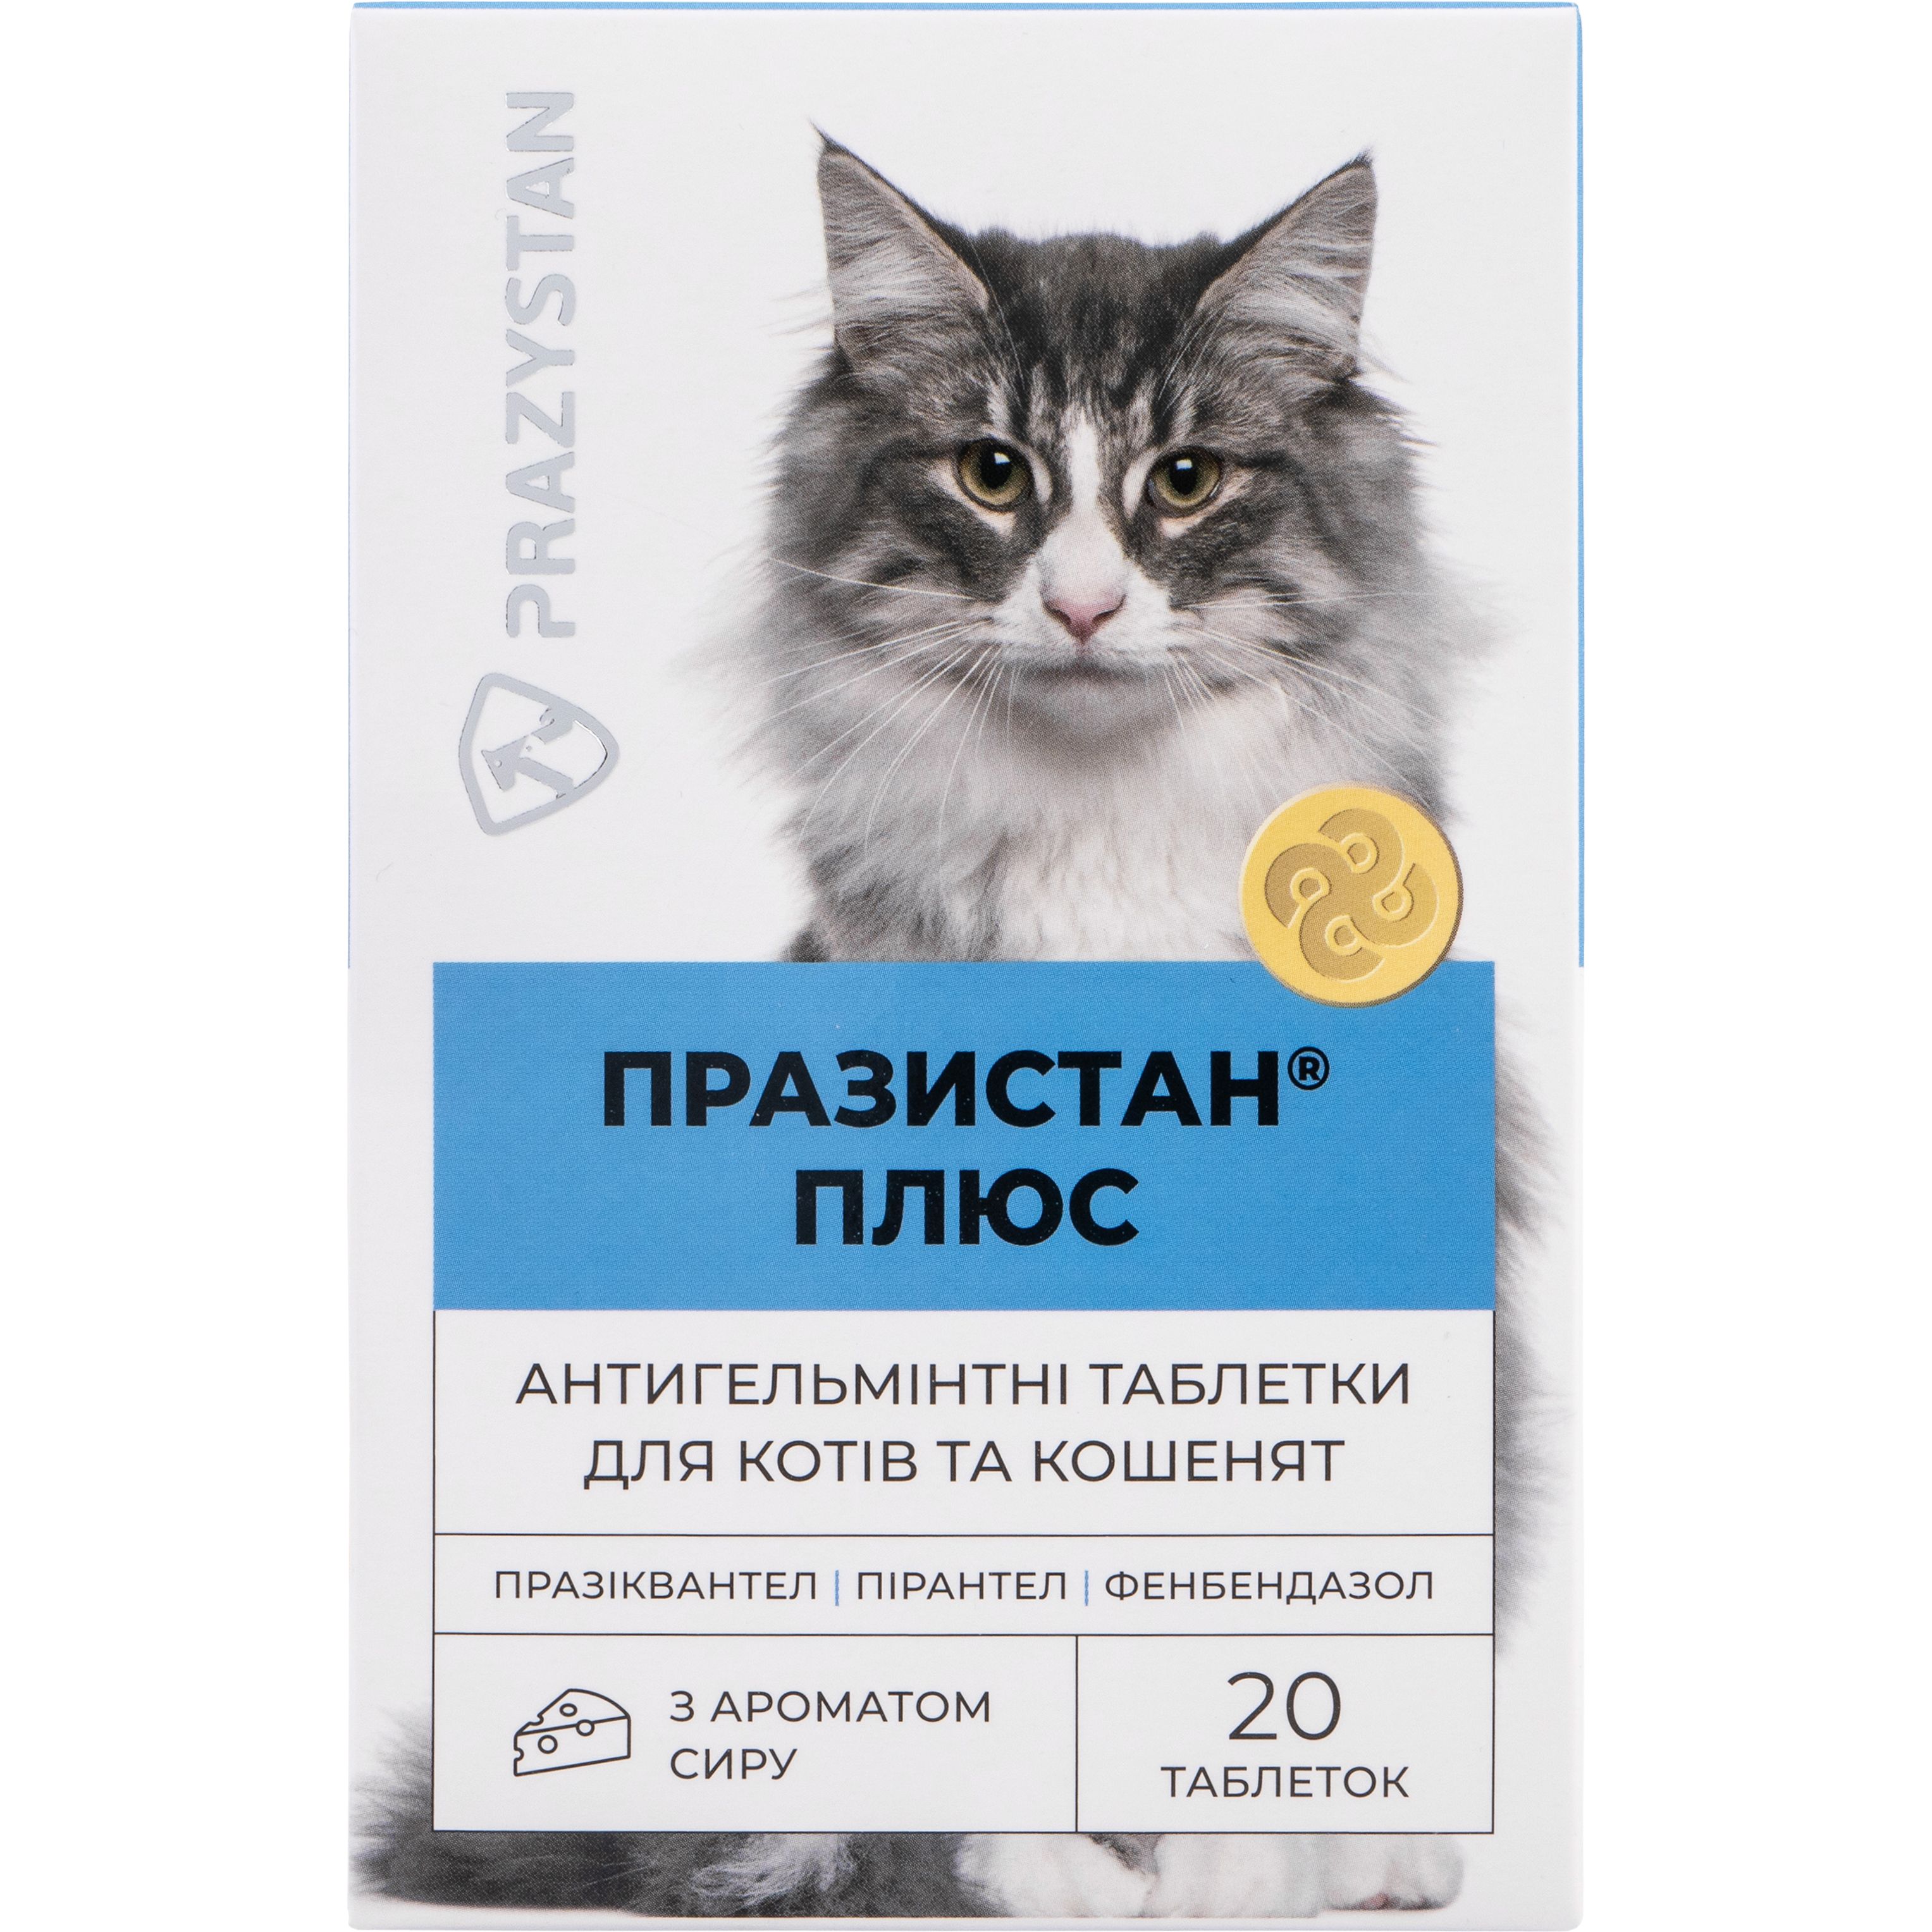 Антигельминтные таблетки Vitomax Празистан+ для кошек с ароматом сыра, 20 таблеток - фото 1